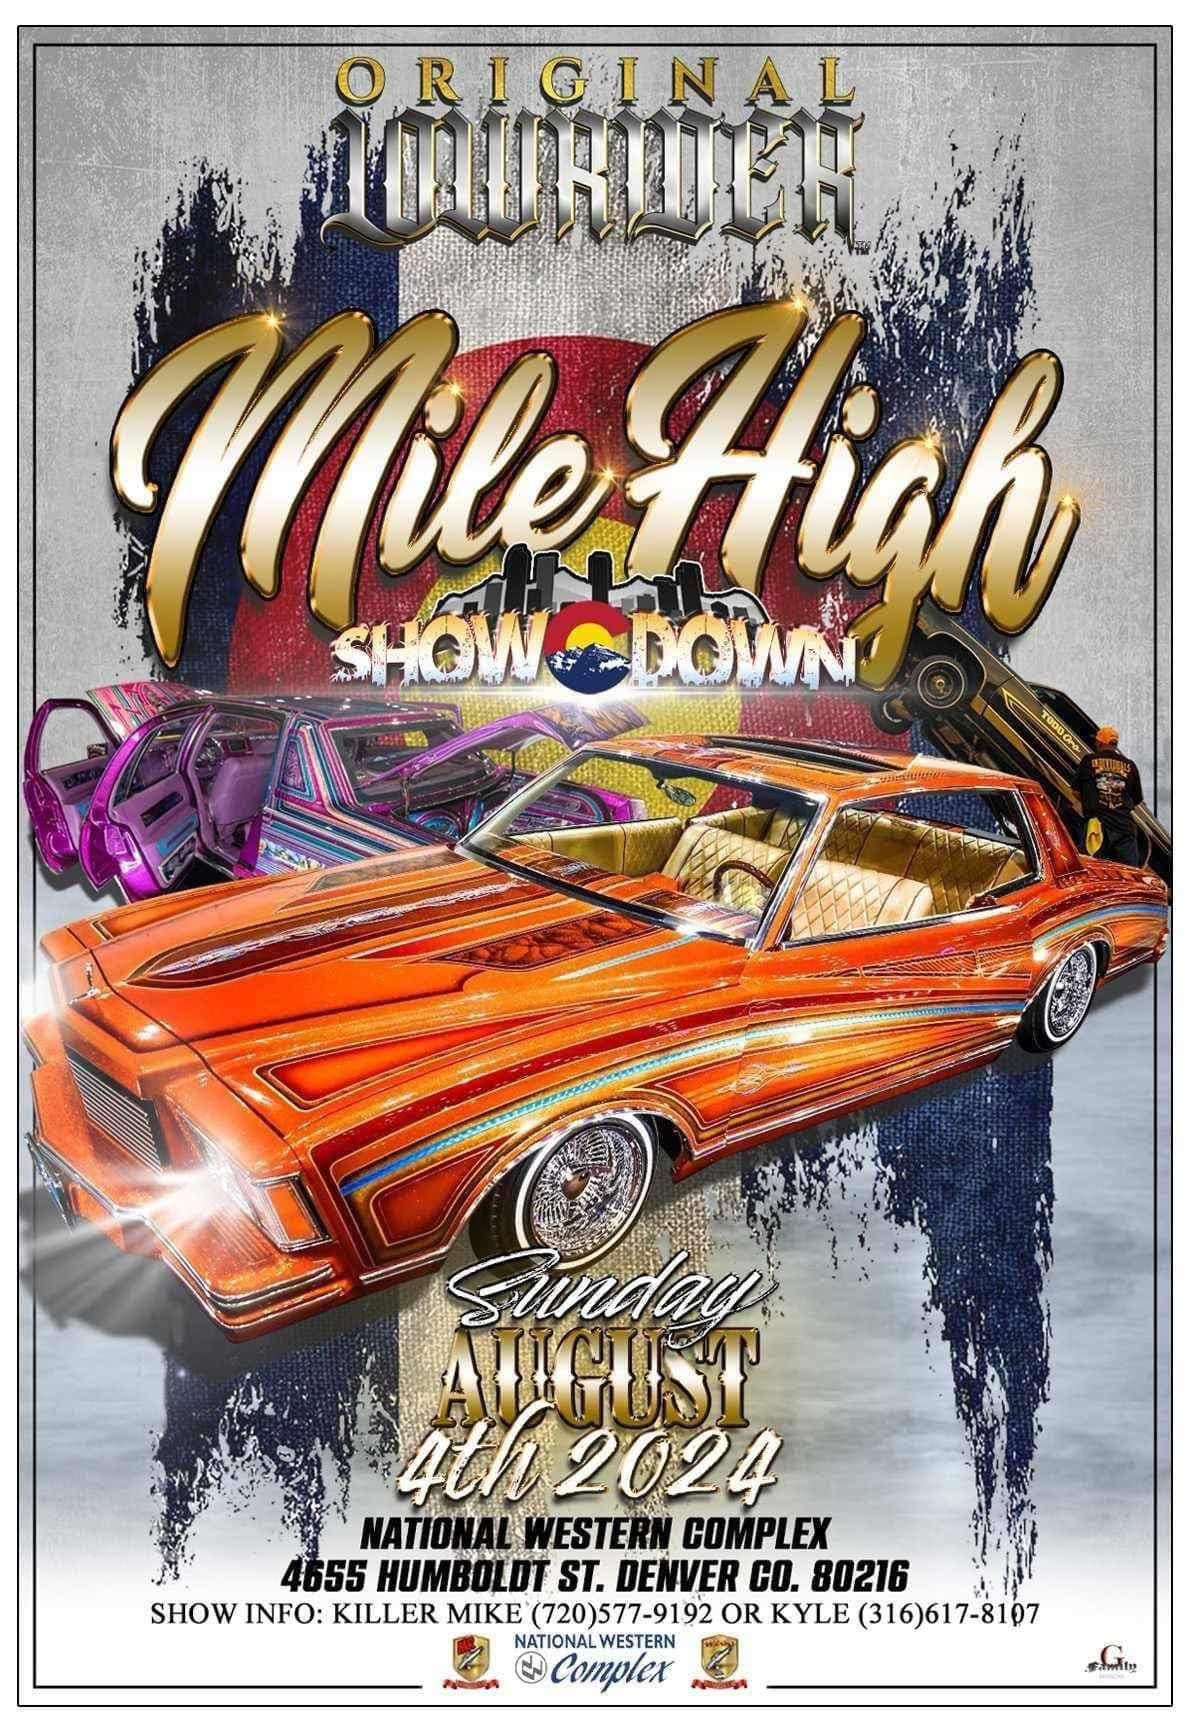 Original Lowrider Mile High Showdown